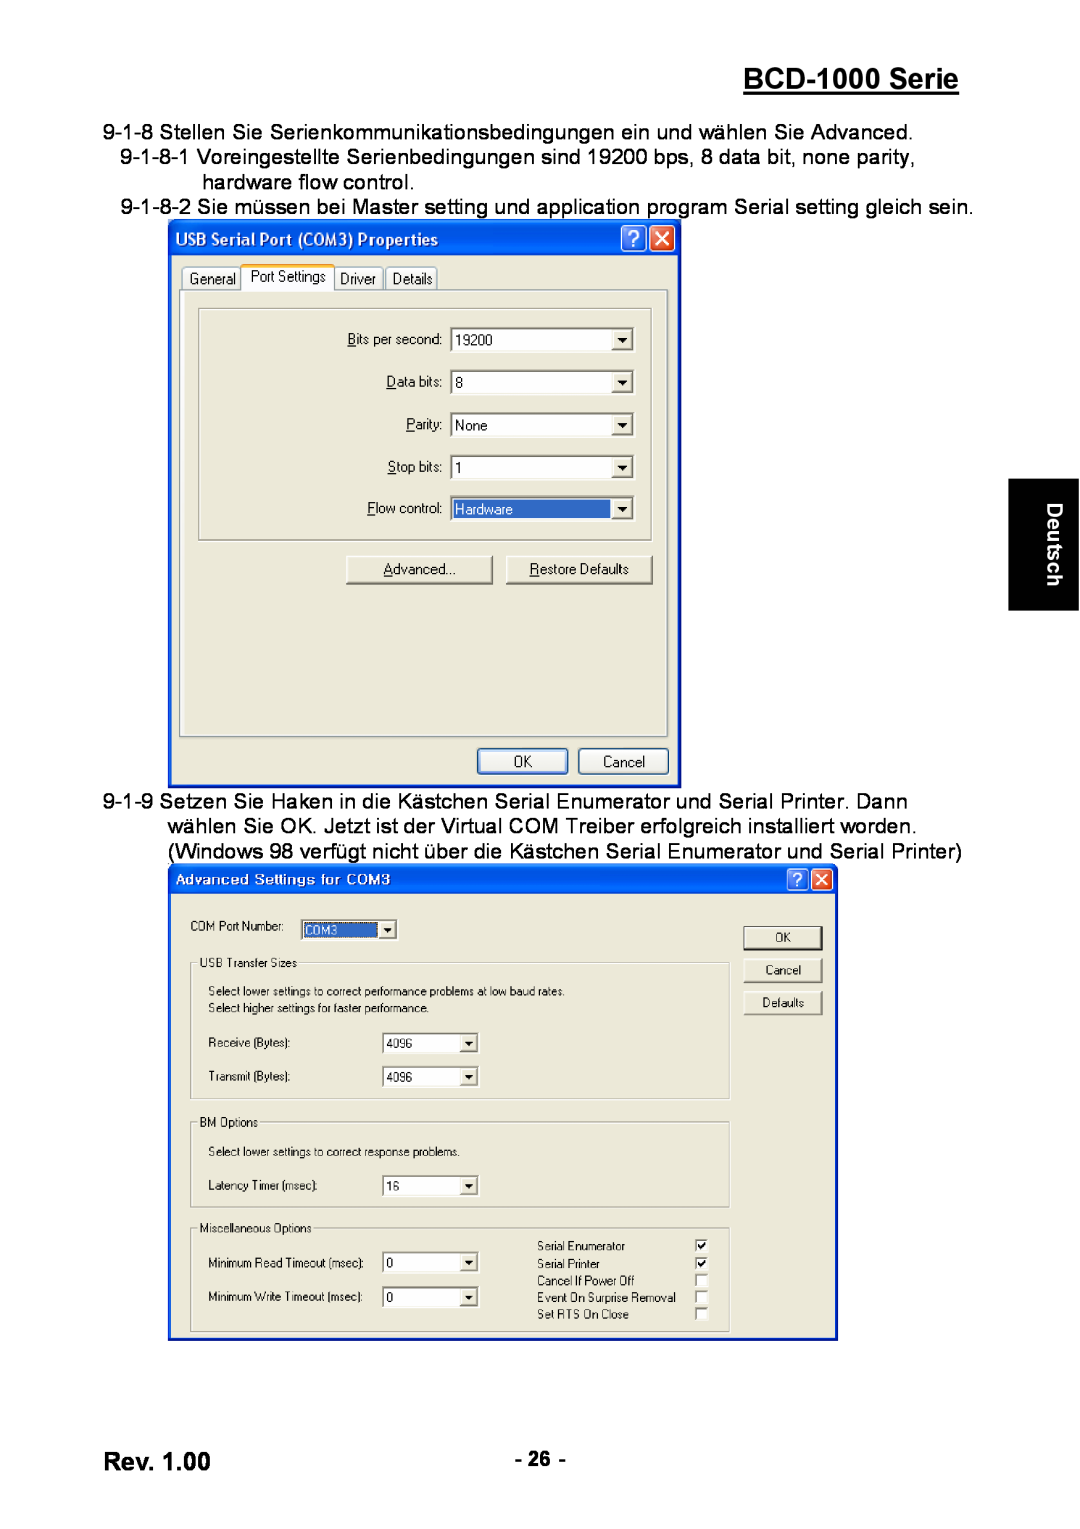 Samsung user manual BCD-1000 Serie, hardware flow control, Deutsch 